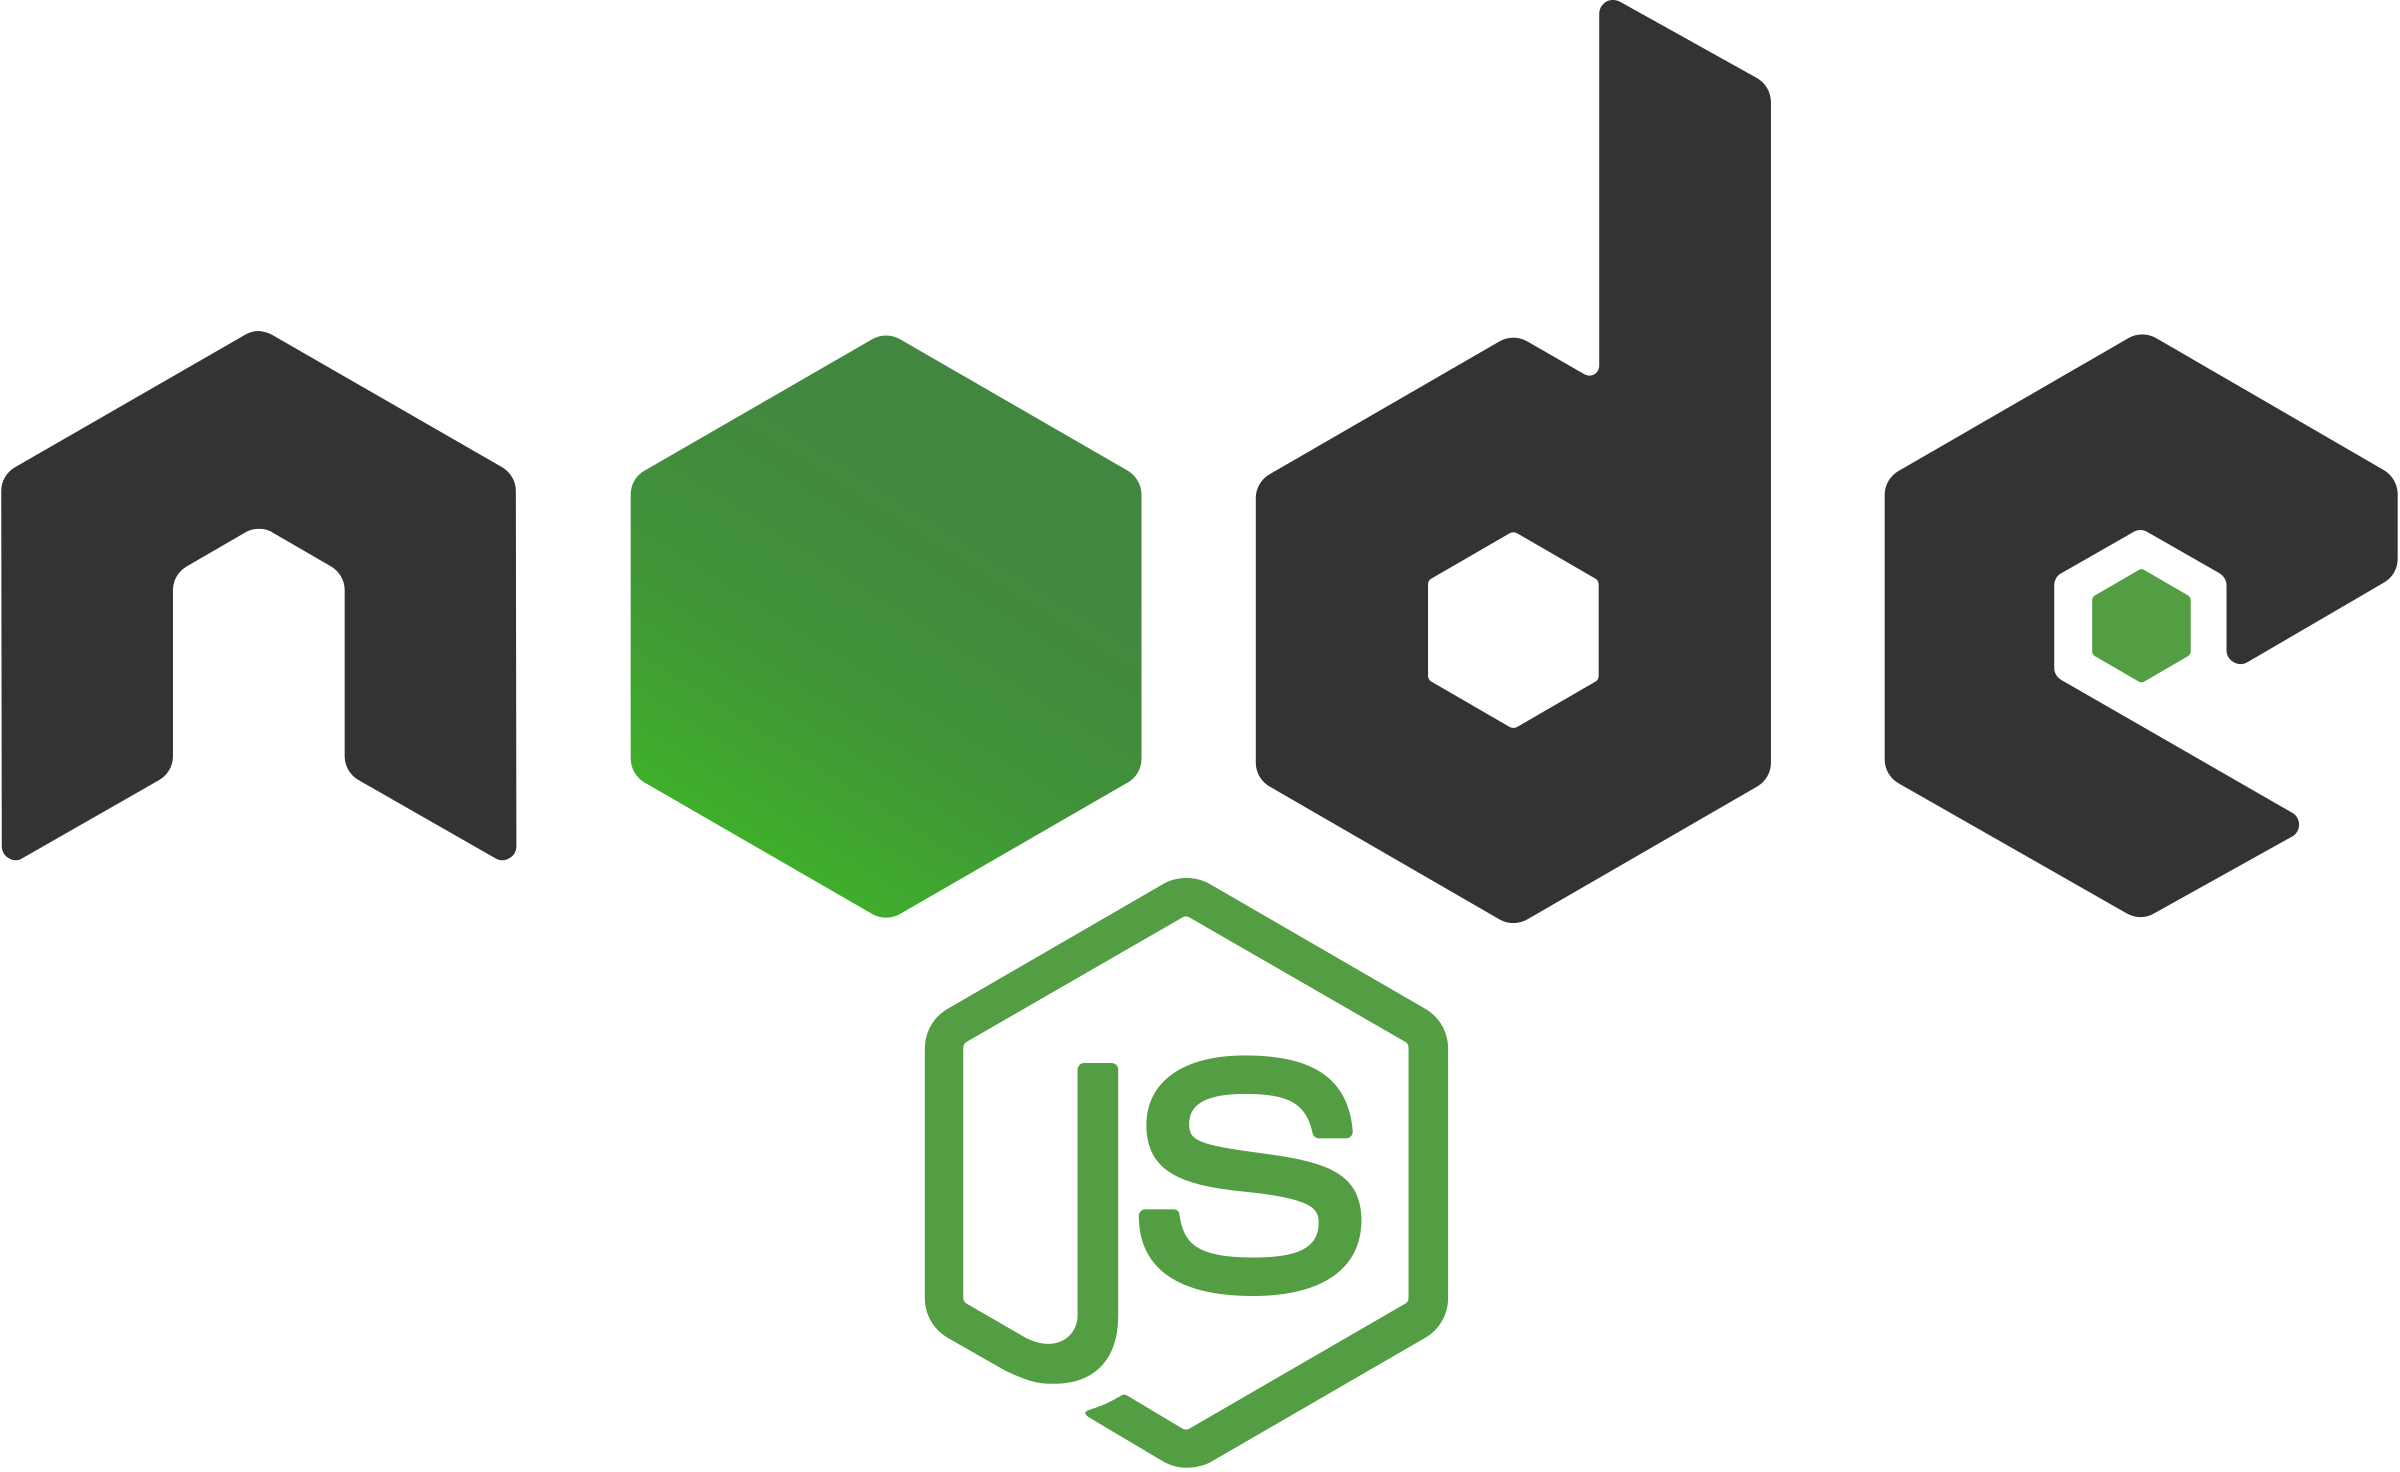 nodejs-1-logo-png-transparent